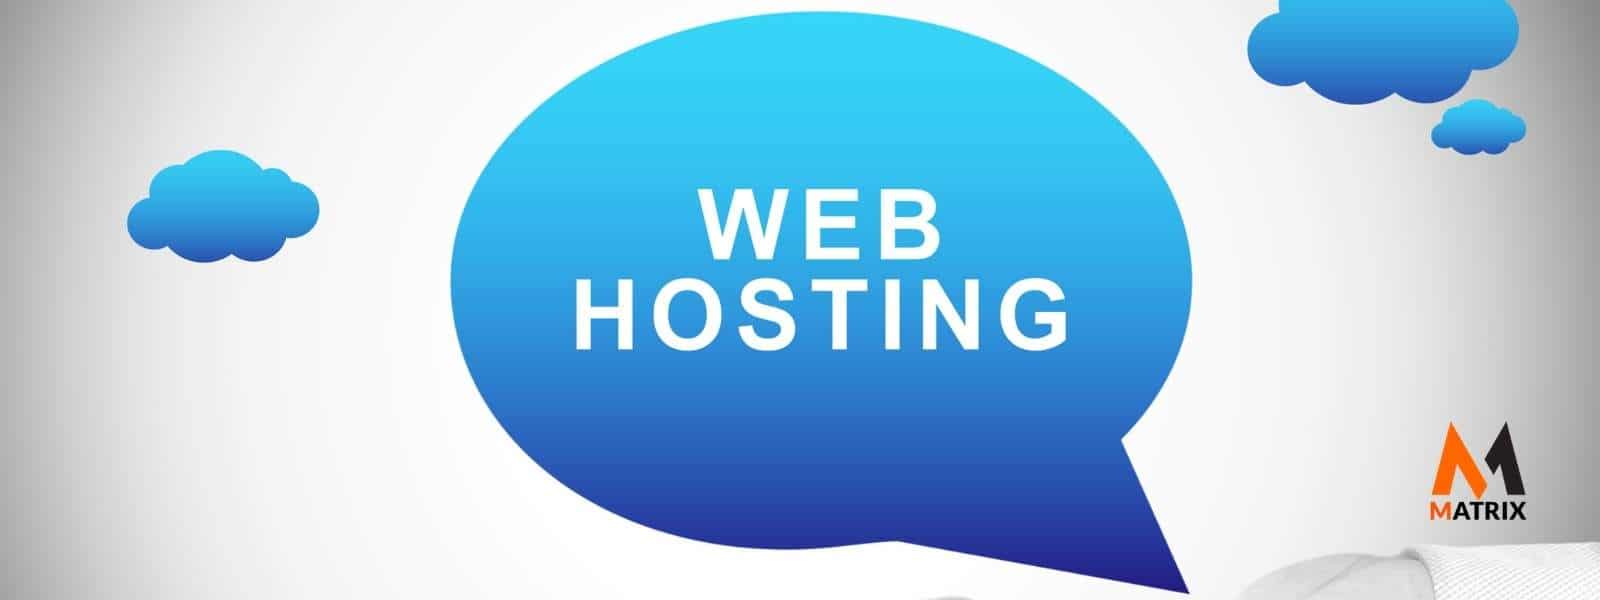 Choosing a ecommerce hosting platform